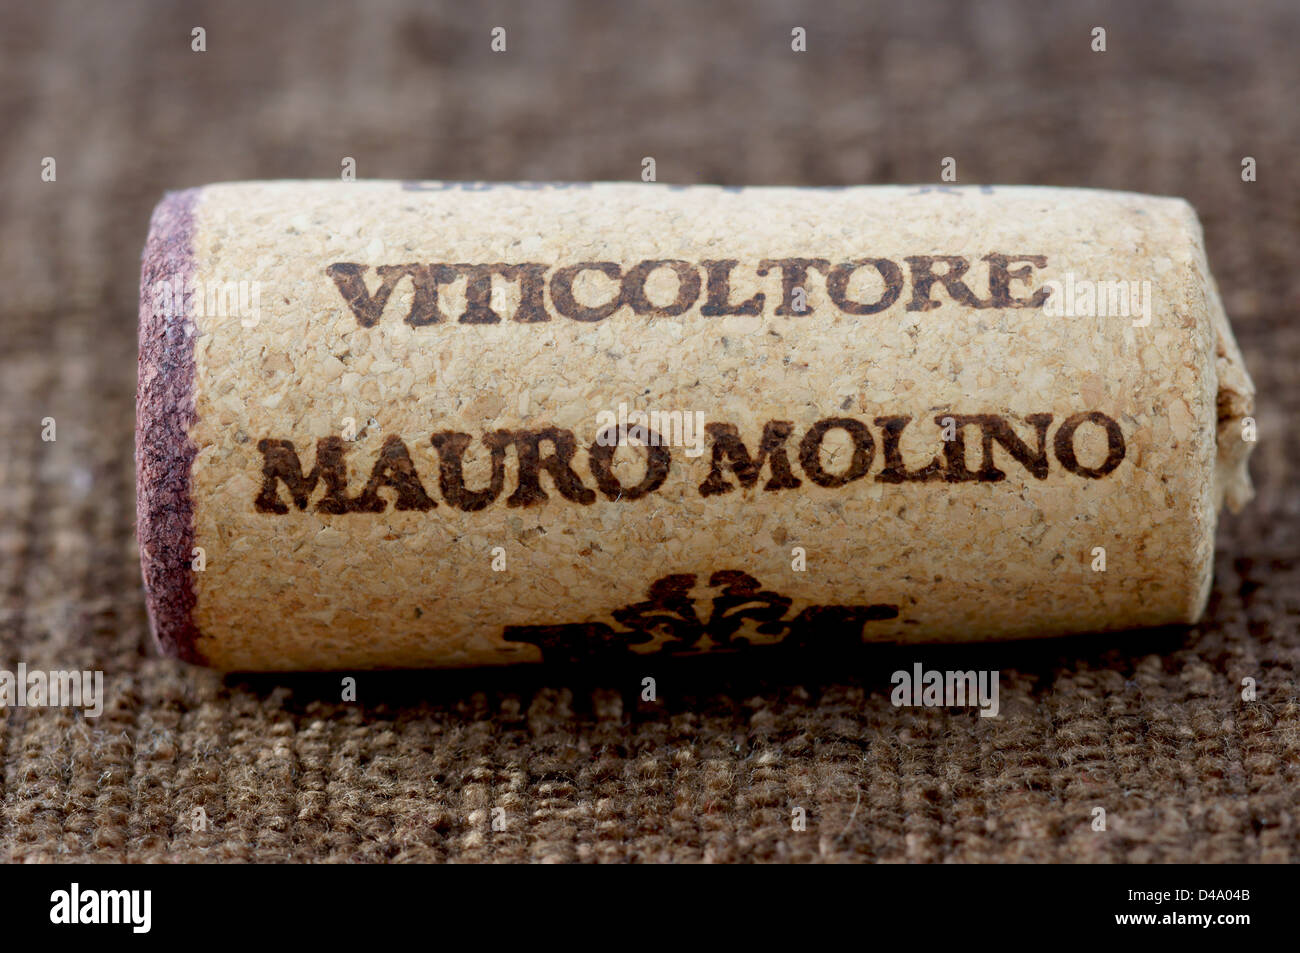 Mauro Molino winemaker wine cork stopper Piemonte Italy Stock Photo